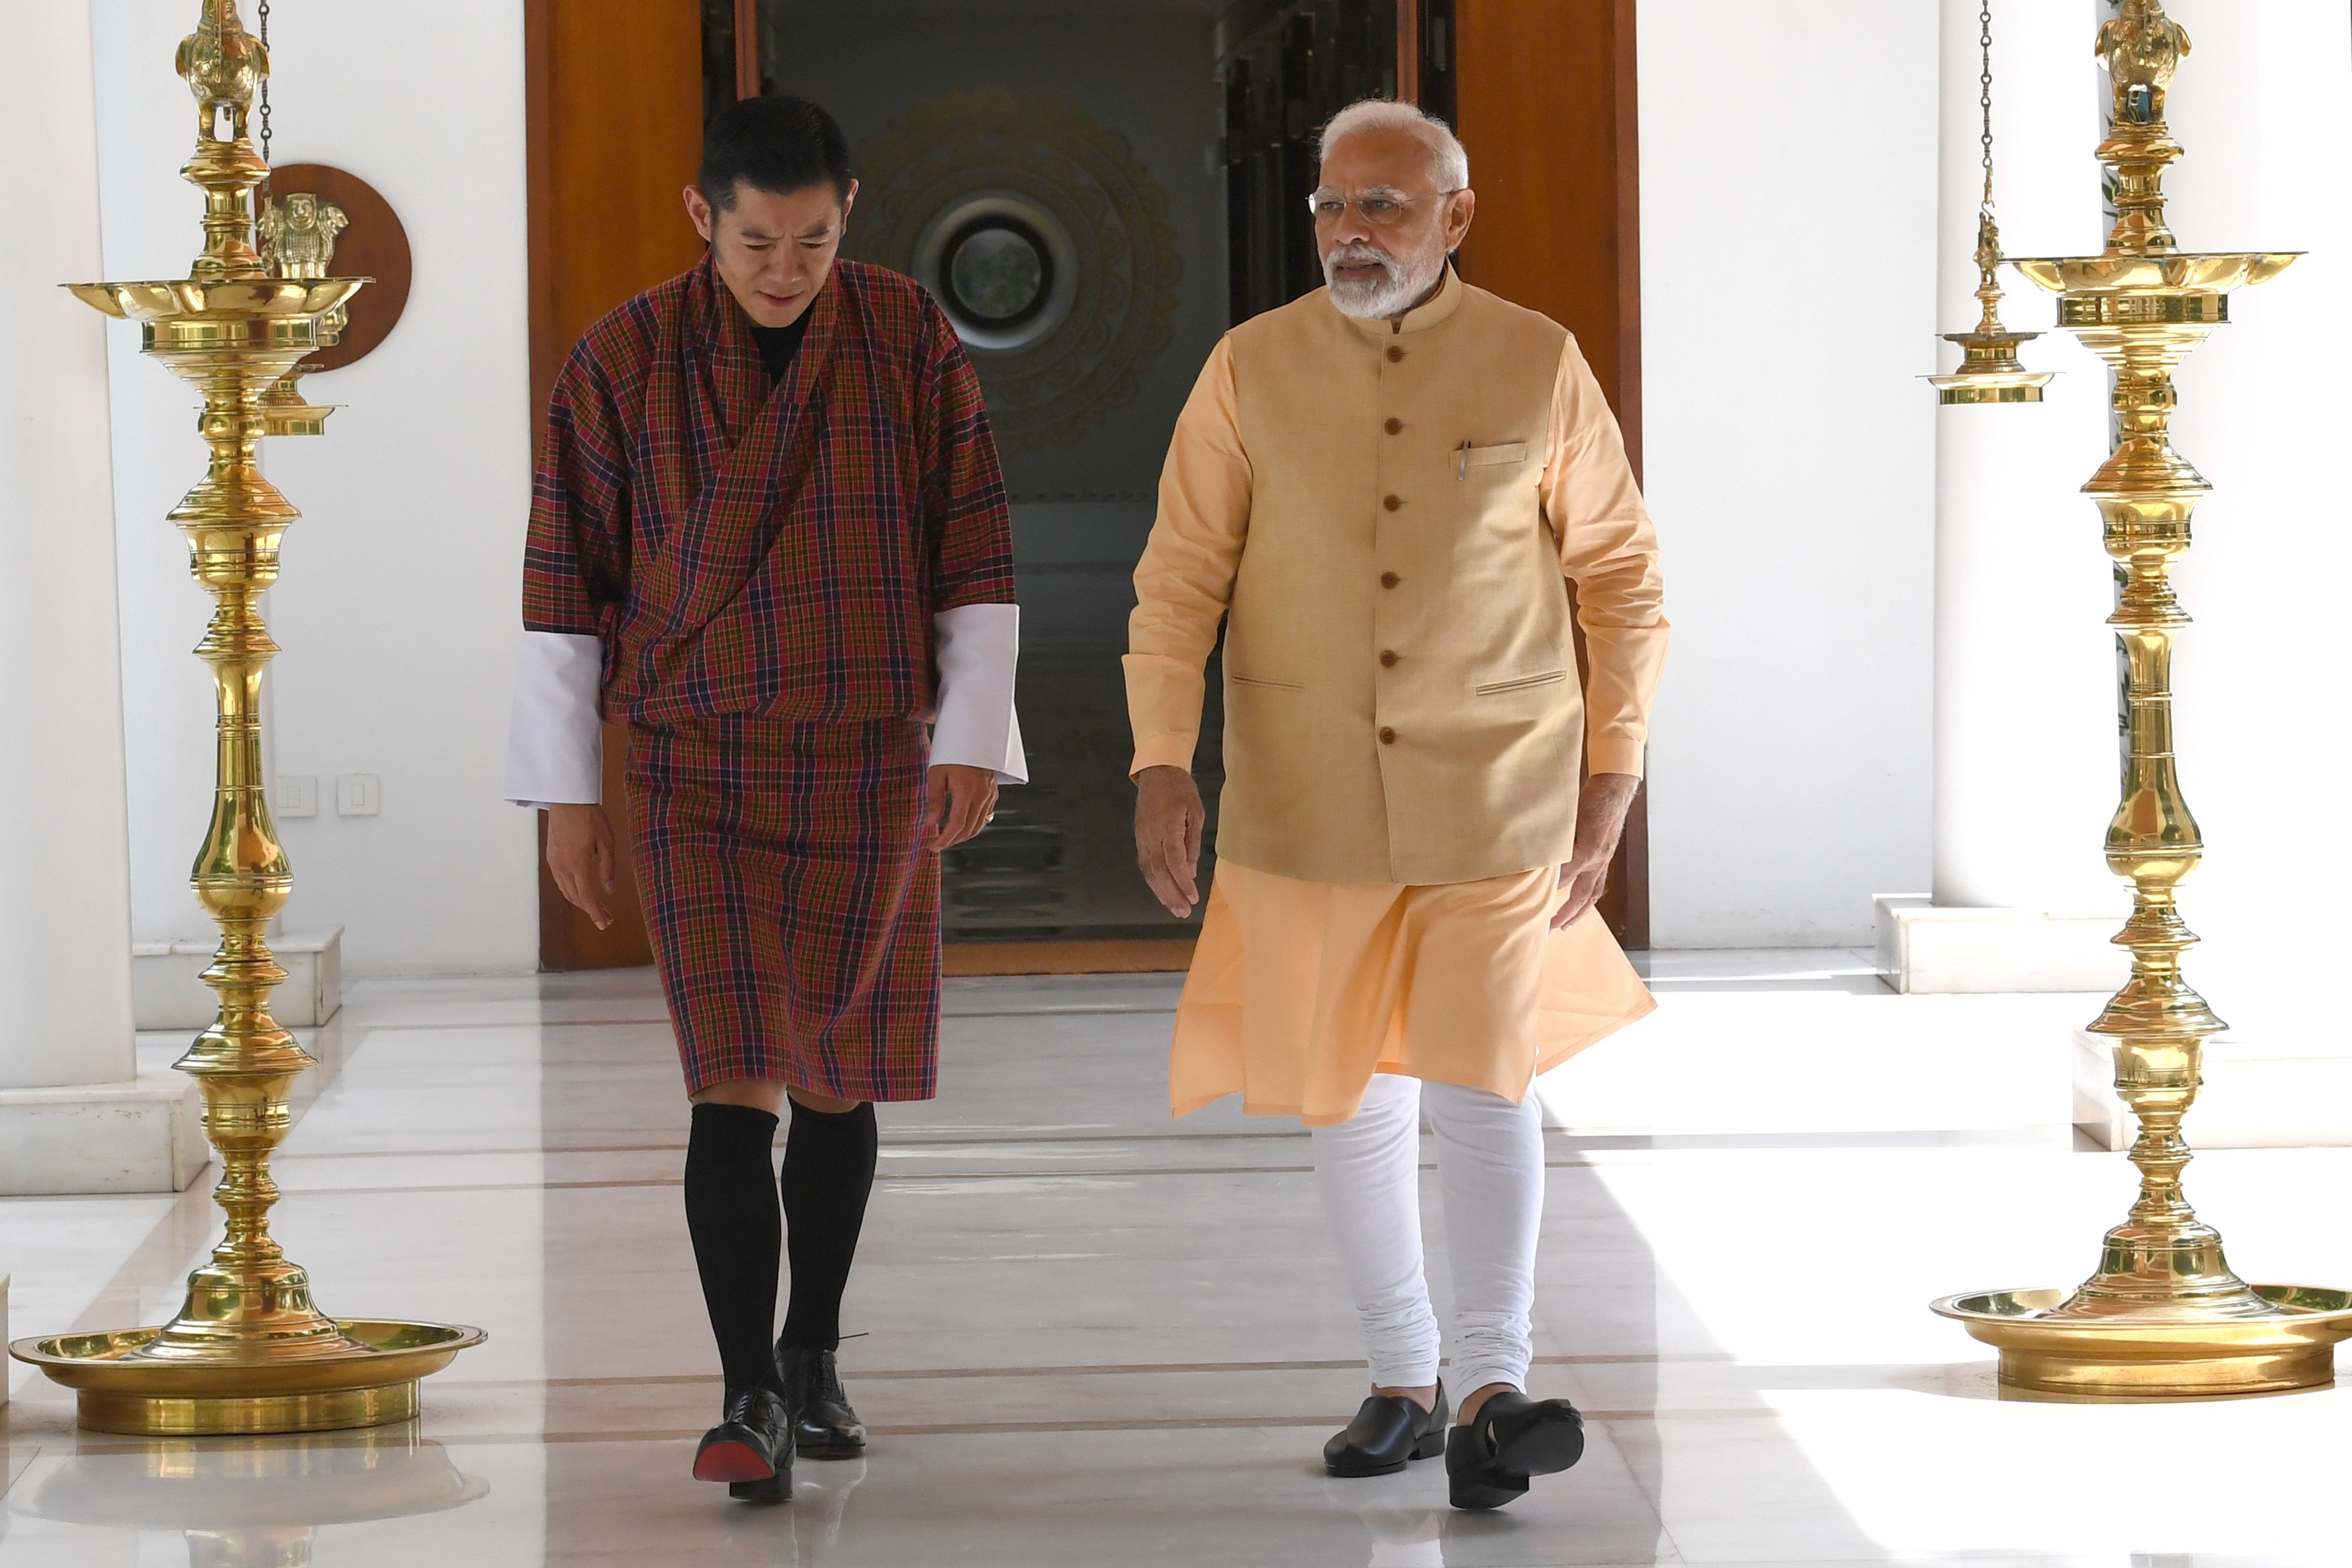 PM meets with His Majesty the King of Bhutan, Jigme Khesar Namgyel Wangchuck